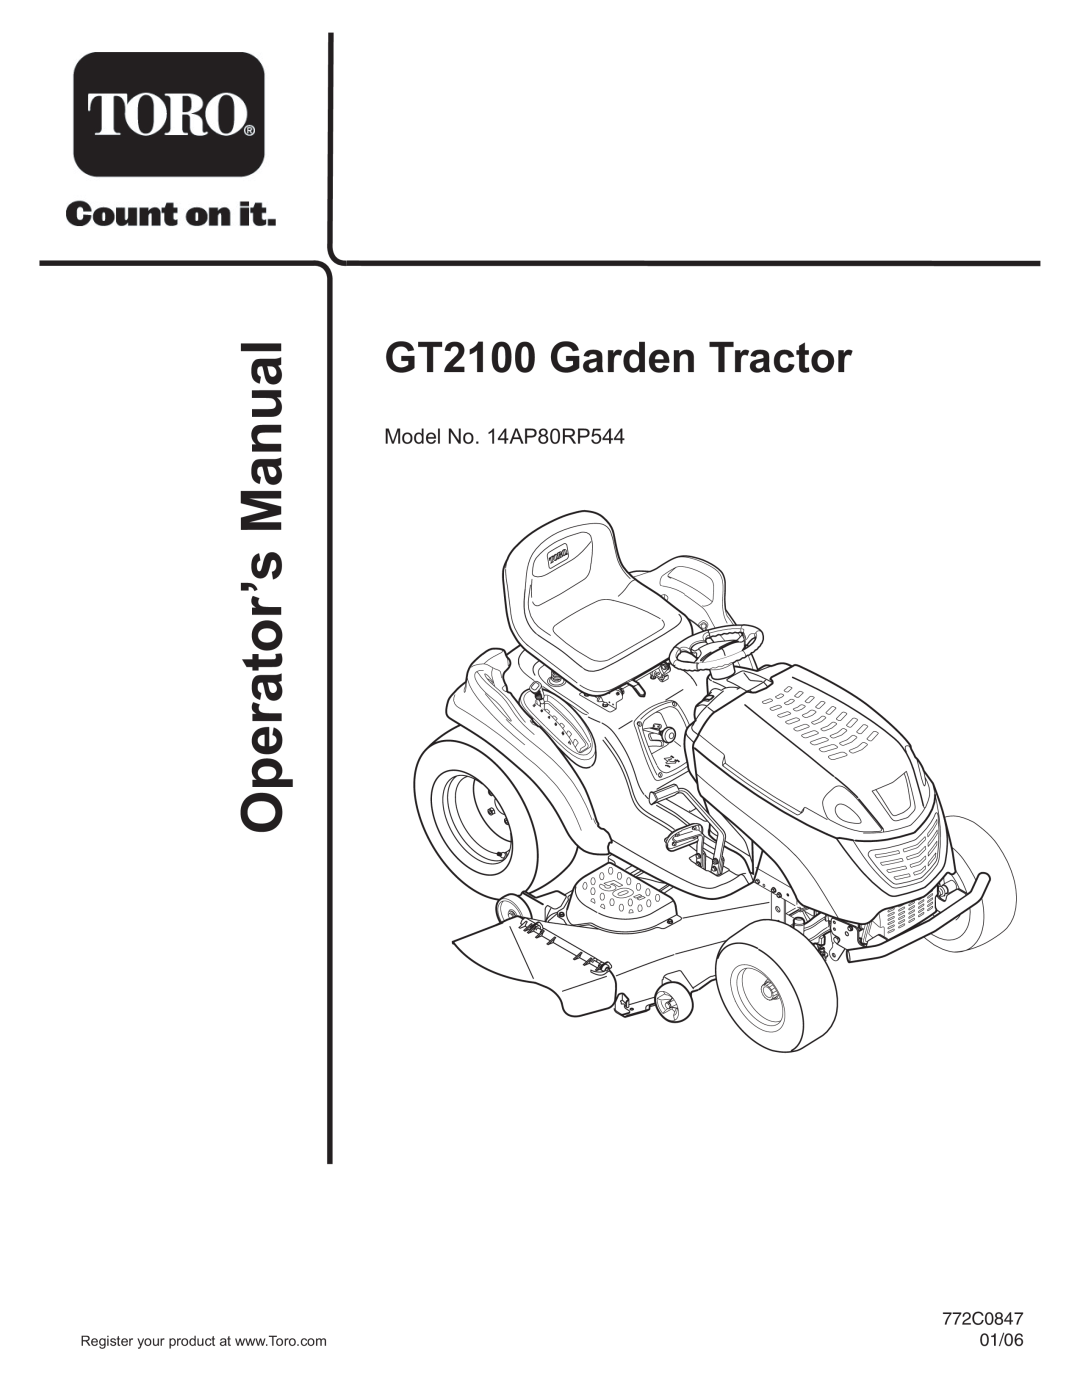 Toro manual aM un la pO re ota s’r, GT2100 Garden Tractor, Model No. 14AP80RP544, 772C0847, 01/06 